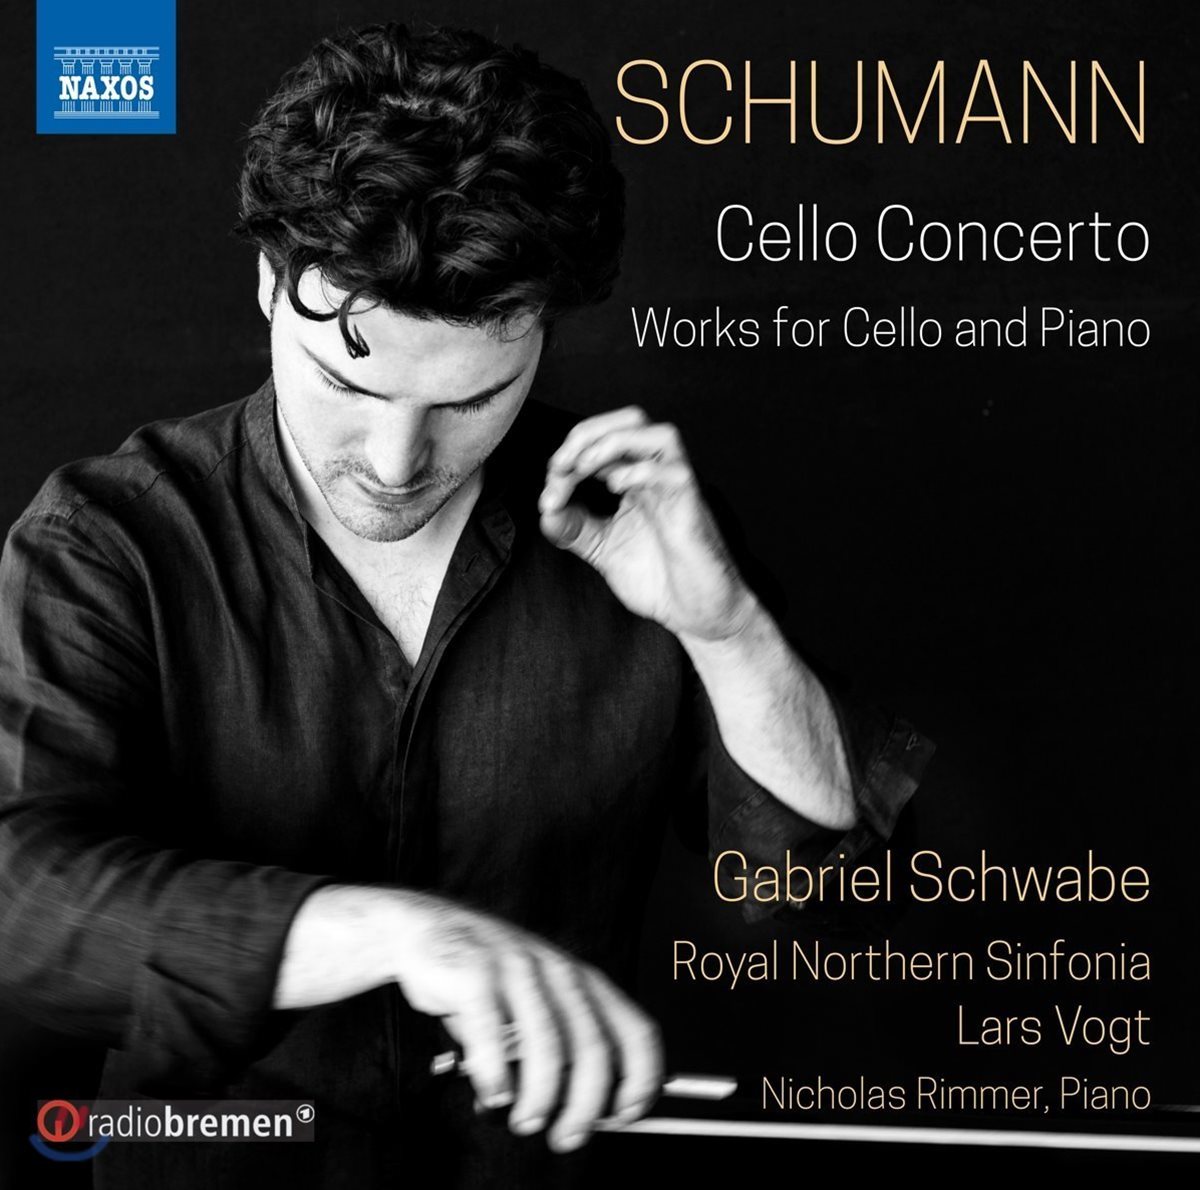 Gabriel Schwabe 슈만: 첼로 협주곡, 첼로와 피아노를 위한 작품 (Schumann: Cello Concerto, Works for Cello and Piano)